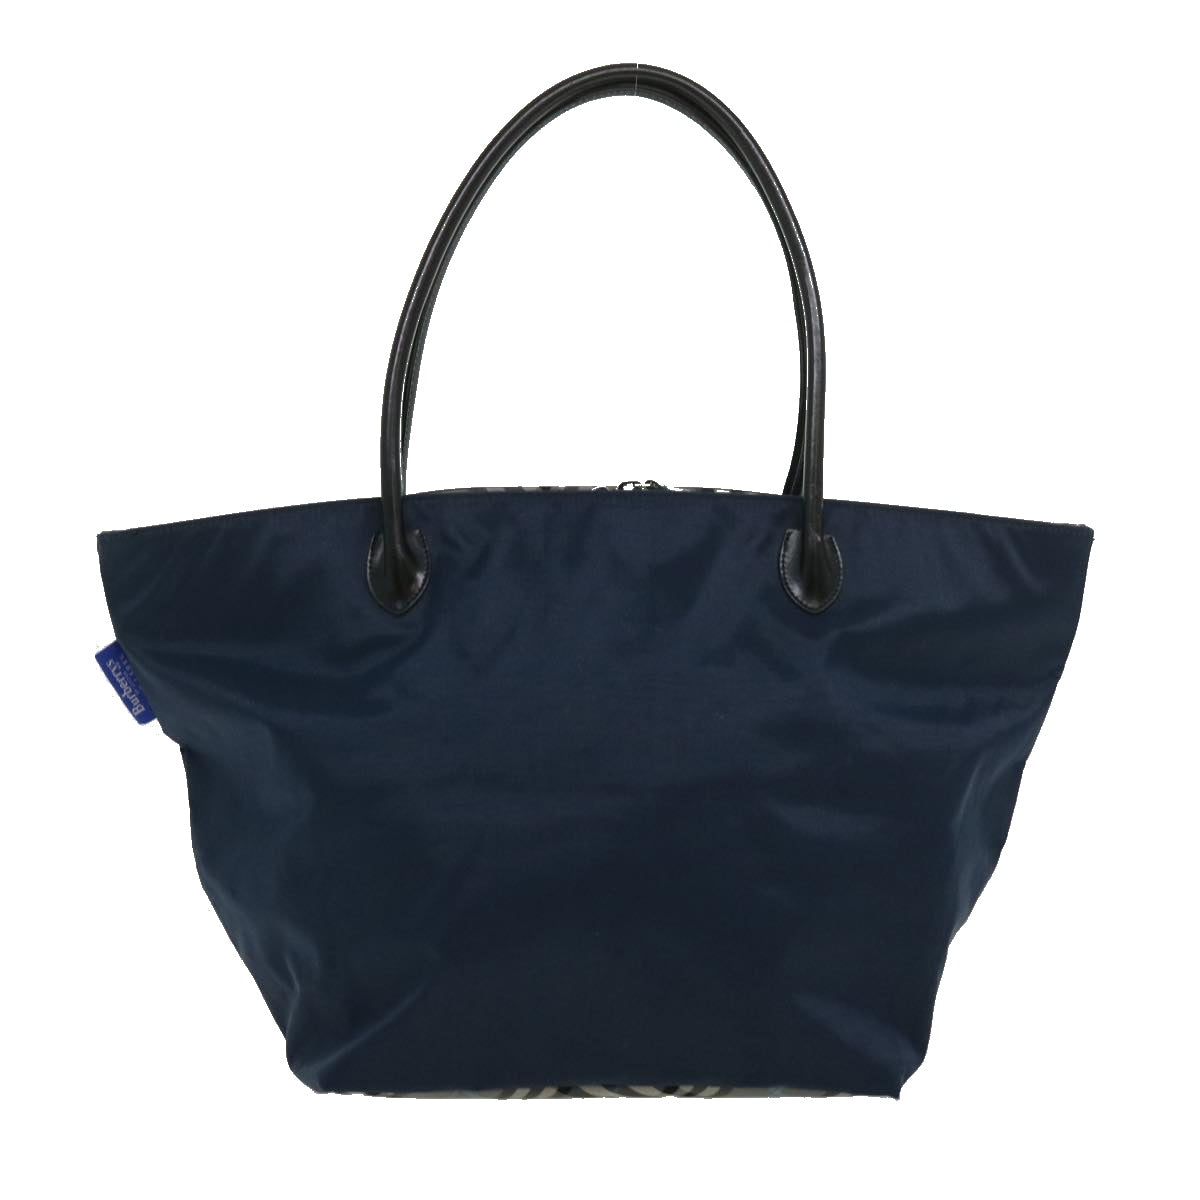 Burberrys Blue Label Nova Check Tote Bag Nylon Navy Auth ki2367 - 0